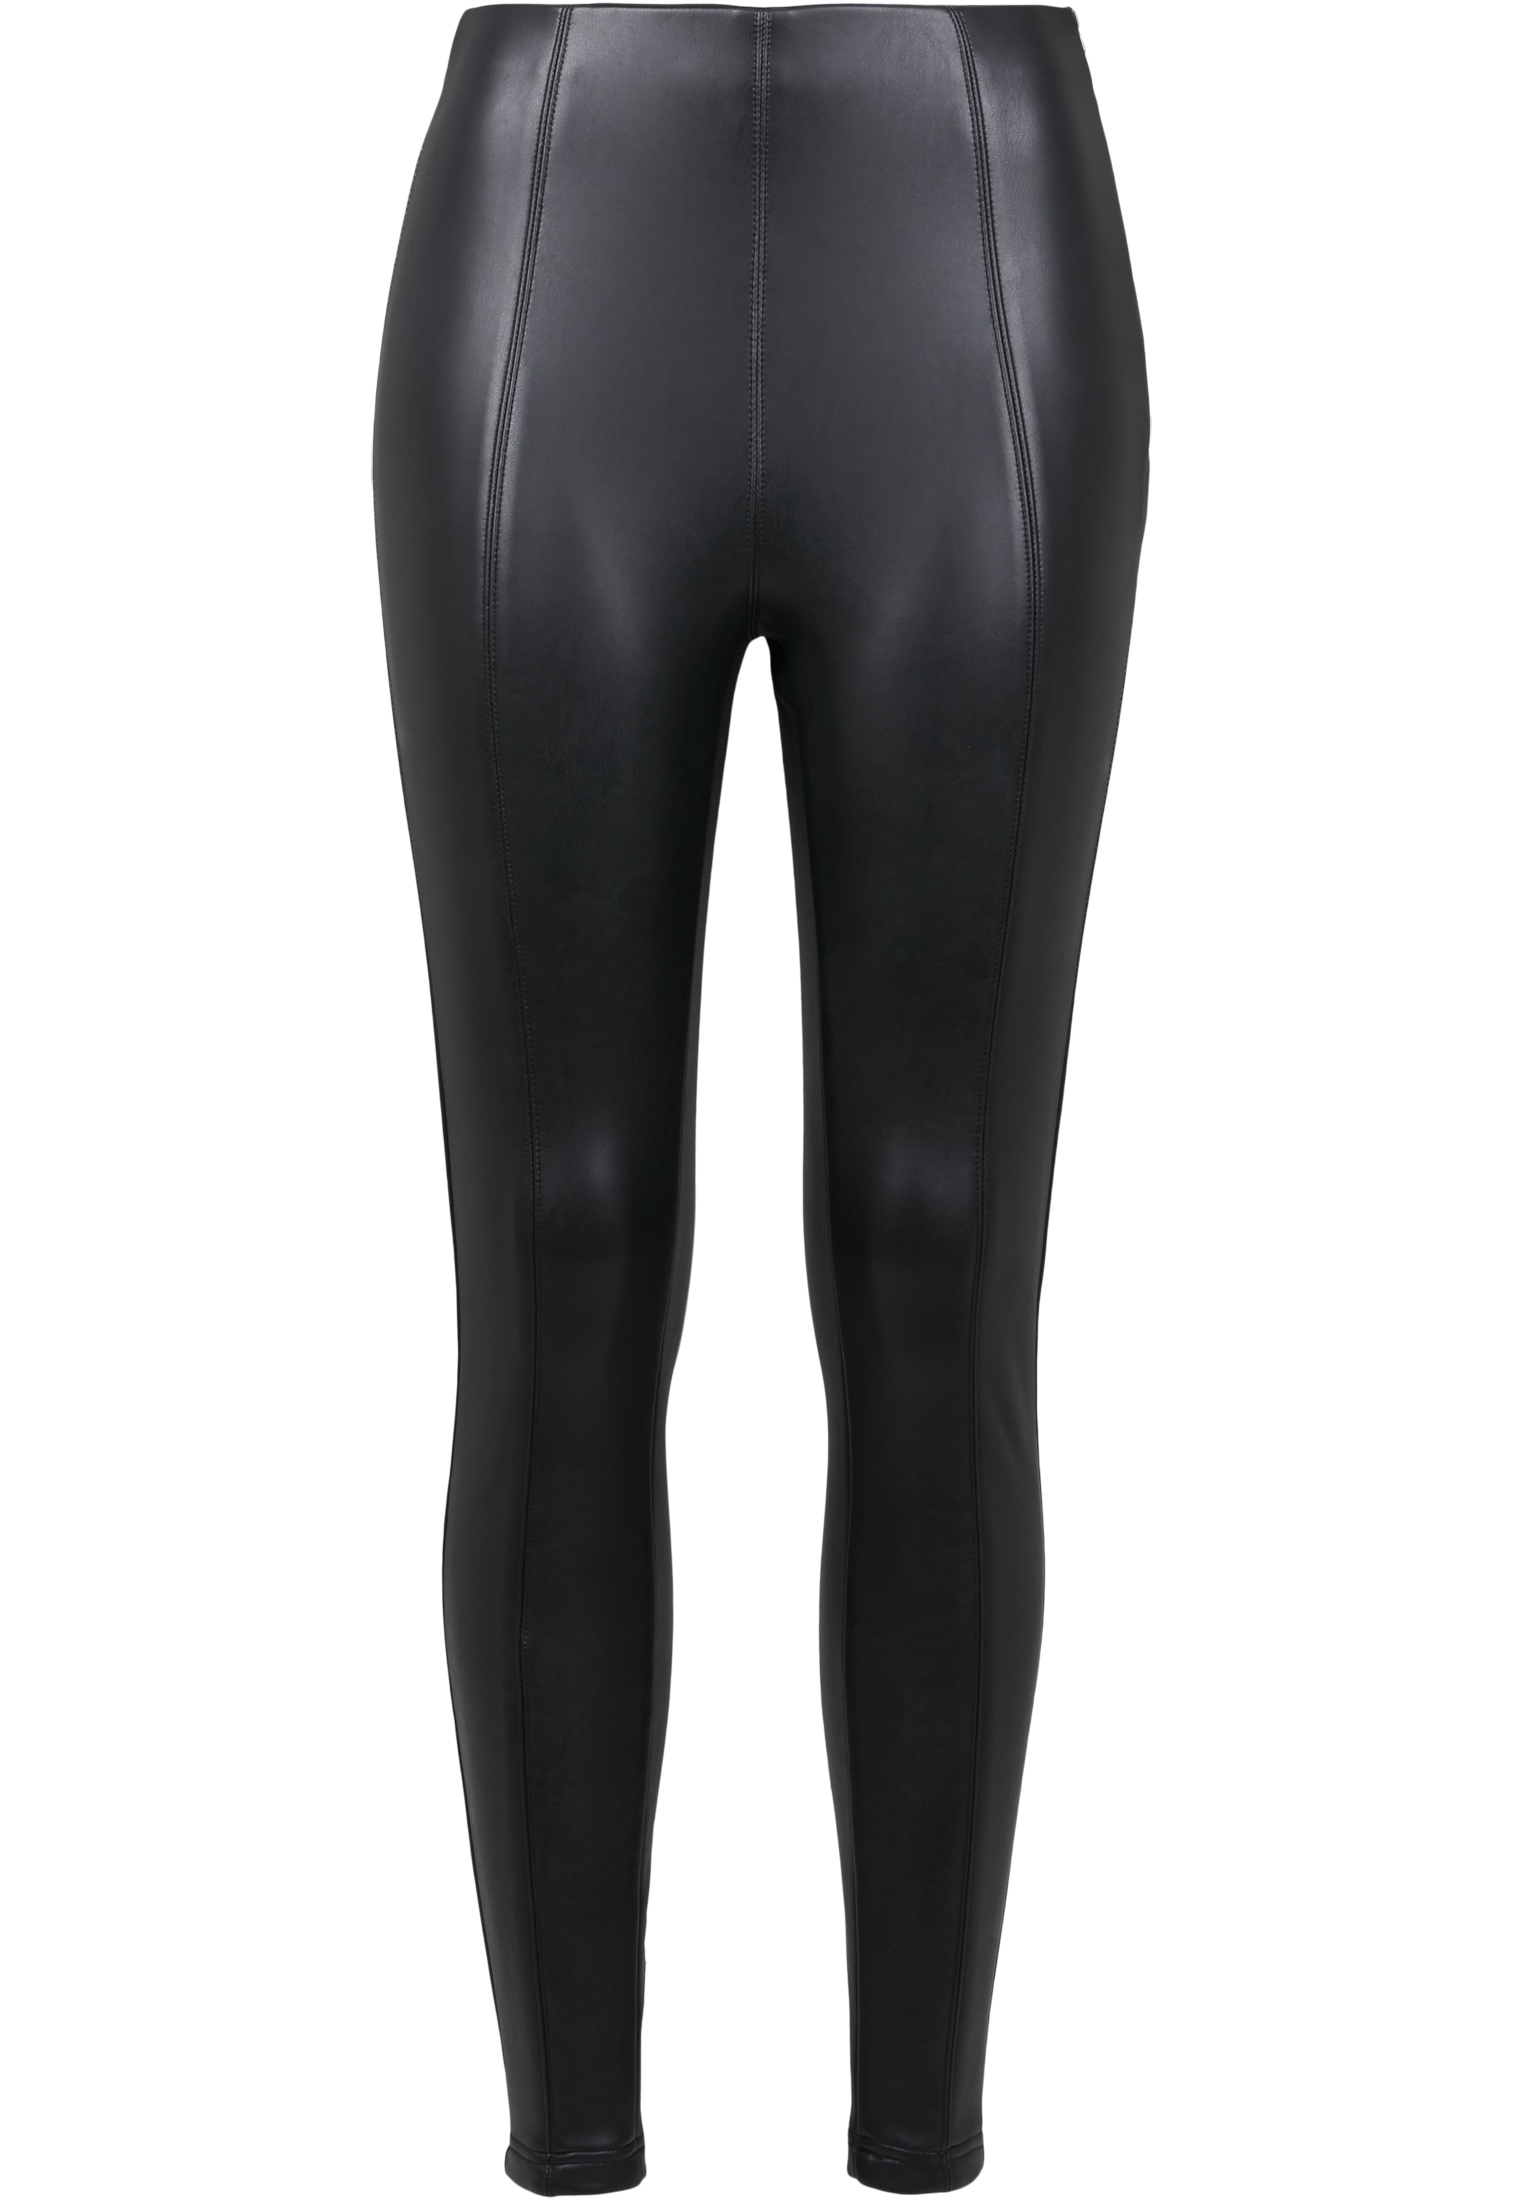 Curvy Ladies Faux Leather Skinny Pants in Farbe black